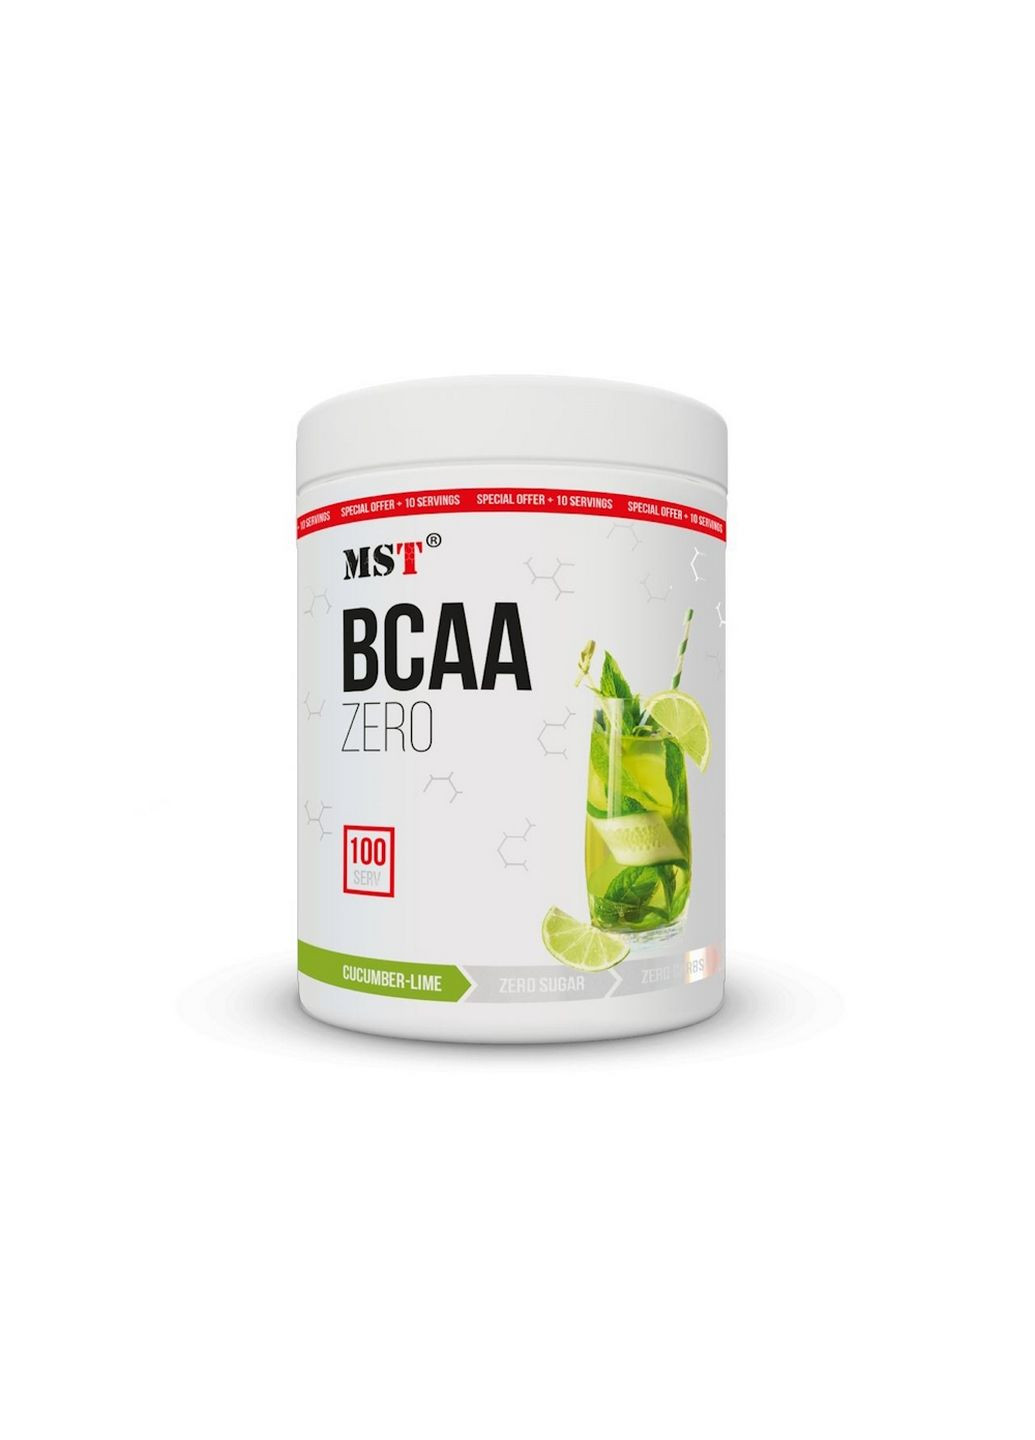 Аминокислота BCAA BCAA ZERO, 600 грамм Огурец-лайм MST (293481017)